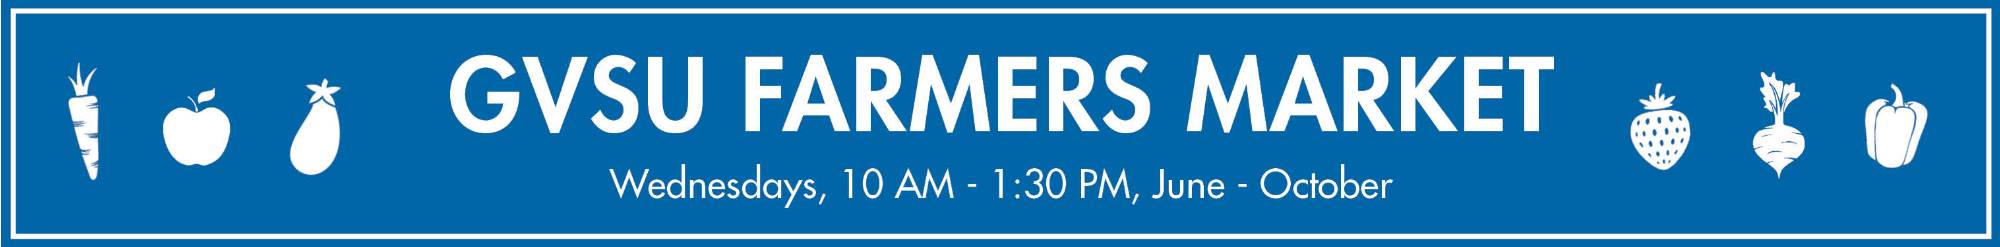 farmers market banner